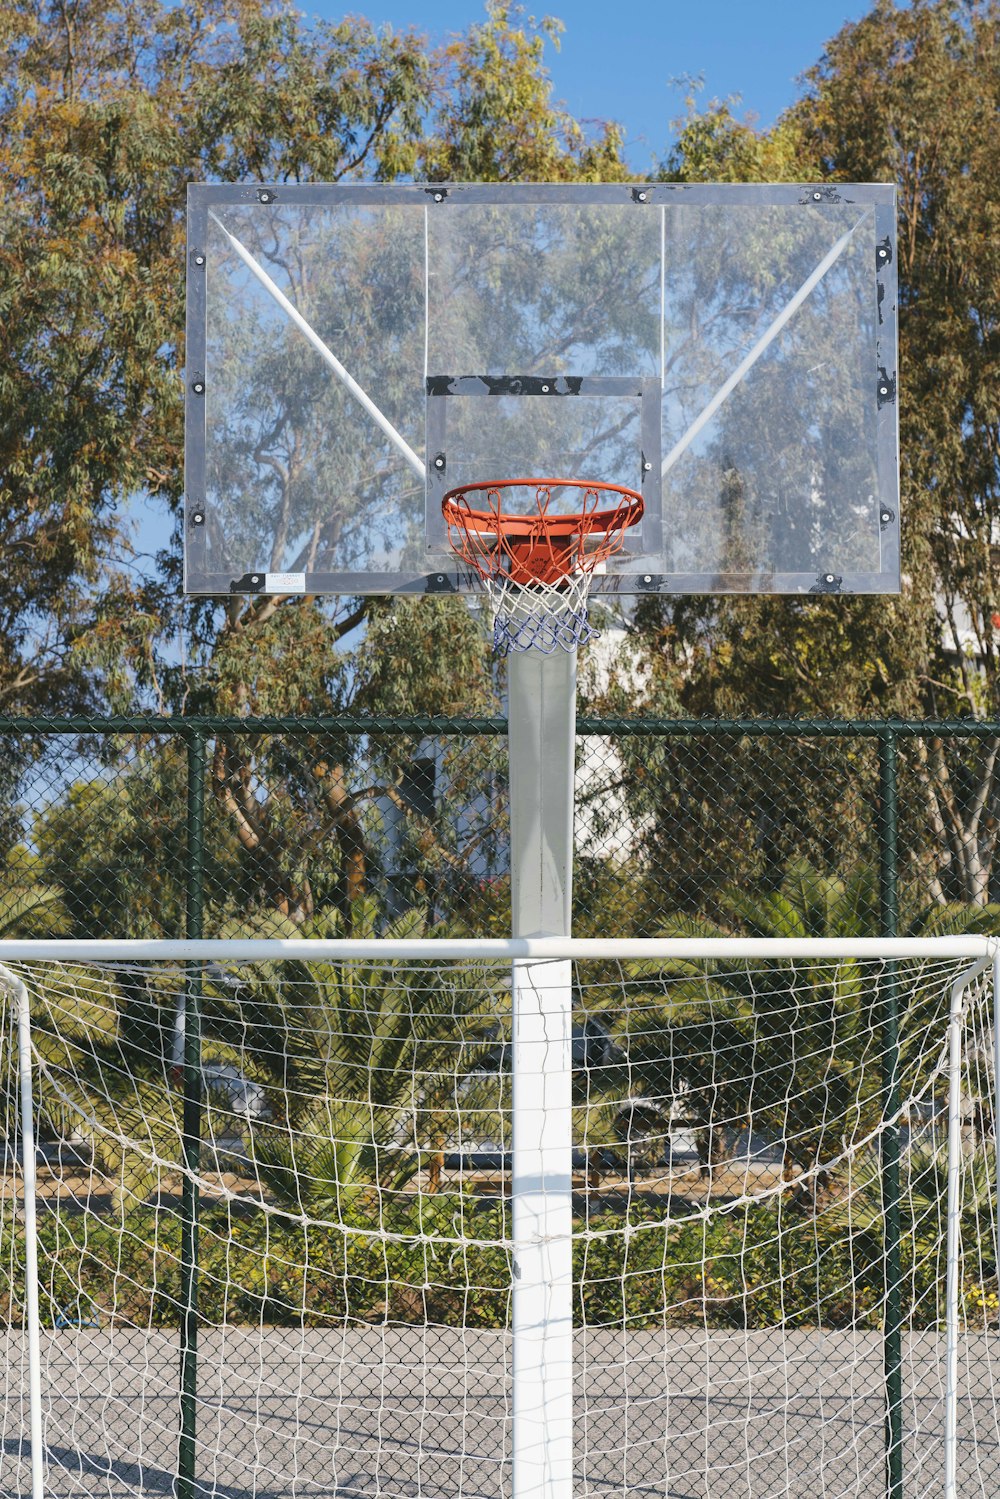 Selektive Fokusfotografie eines tragbaren Basketballsystems bei Tag